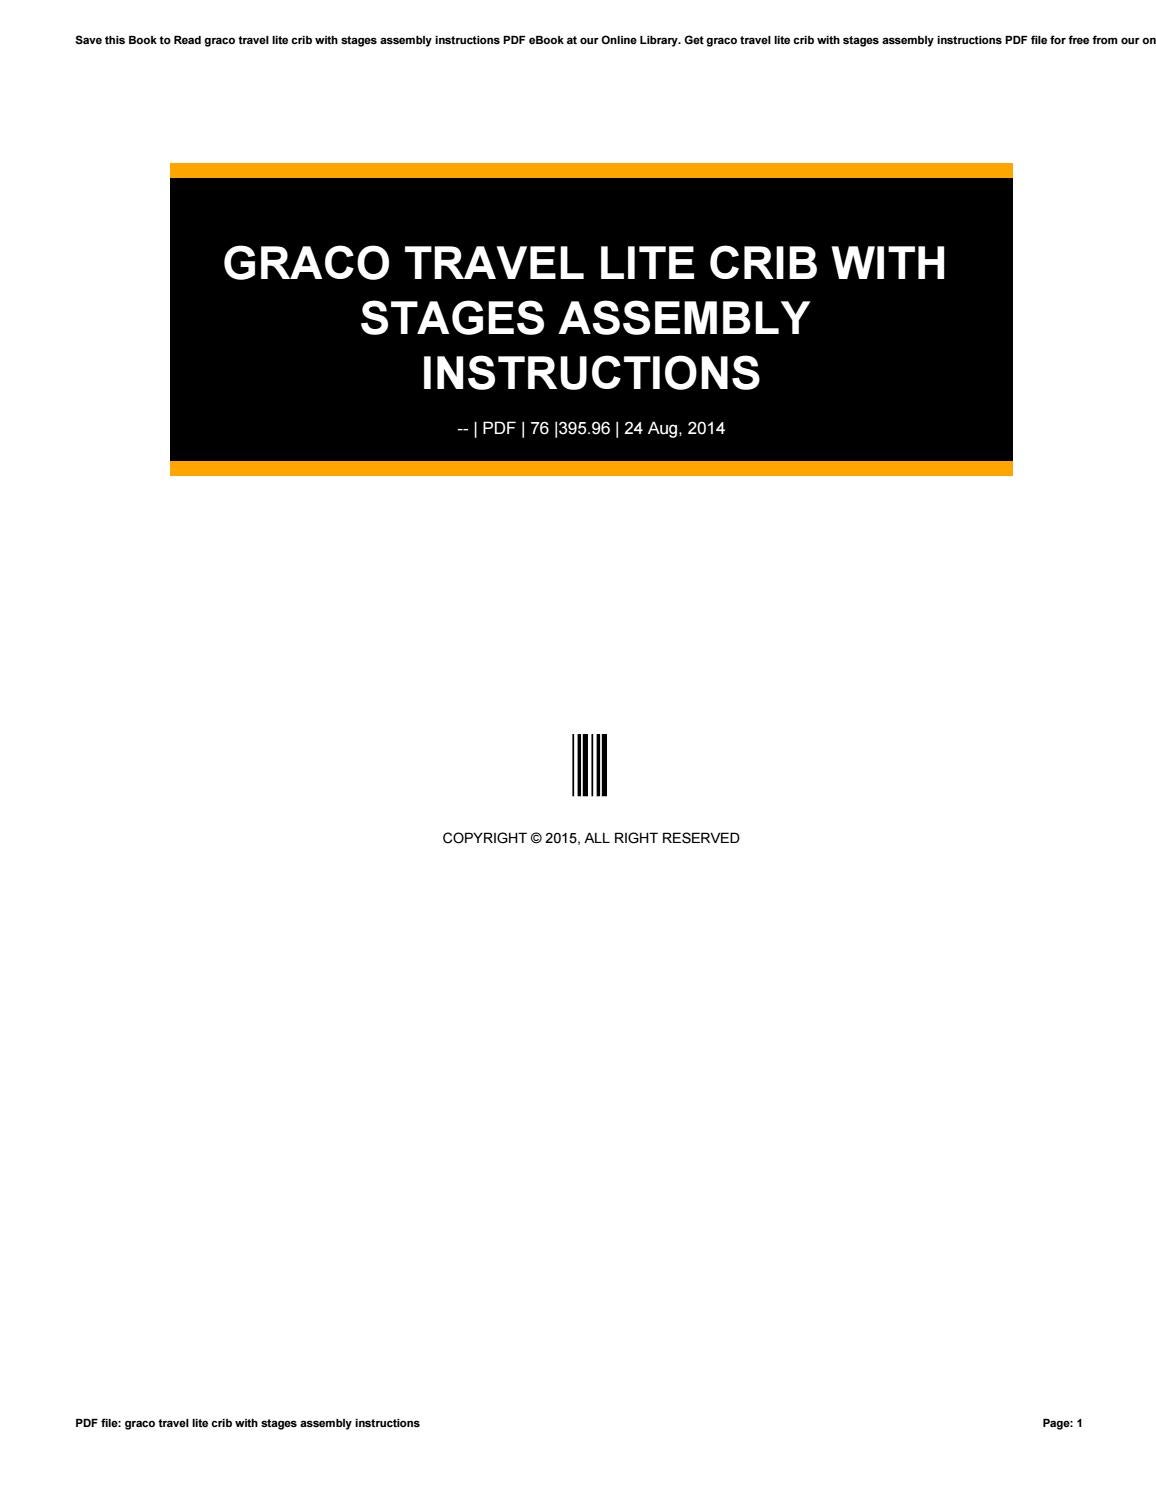 graco travel lite crib instructions